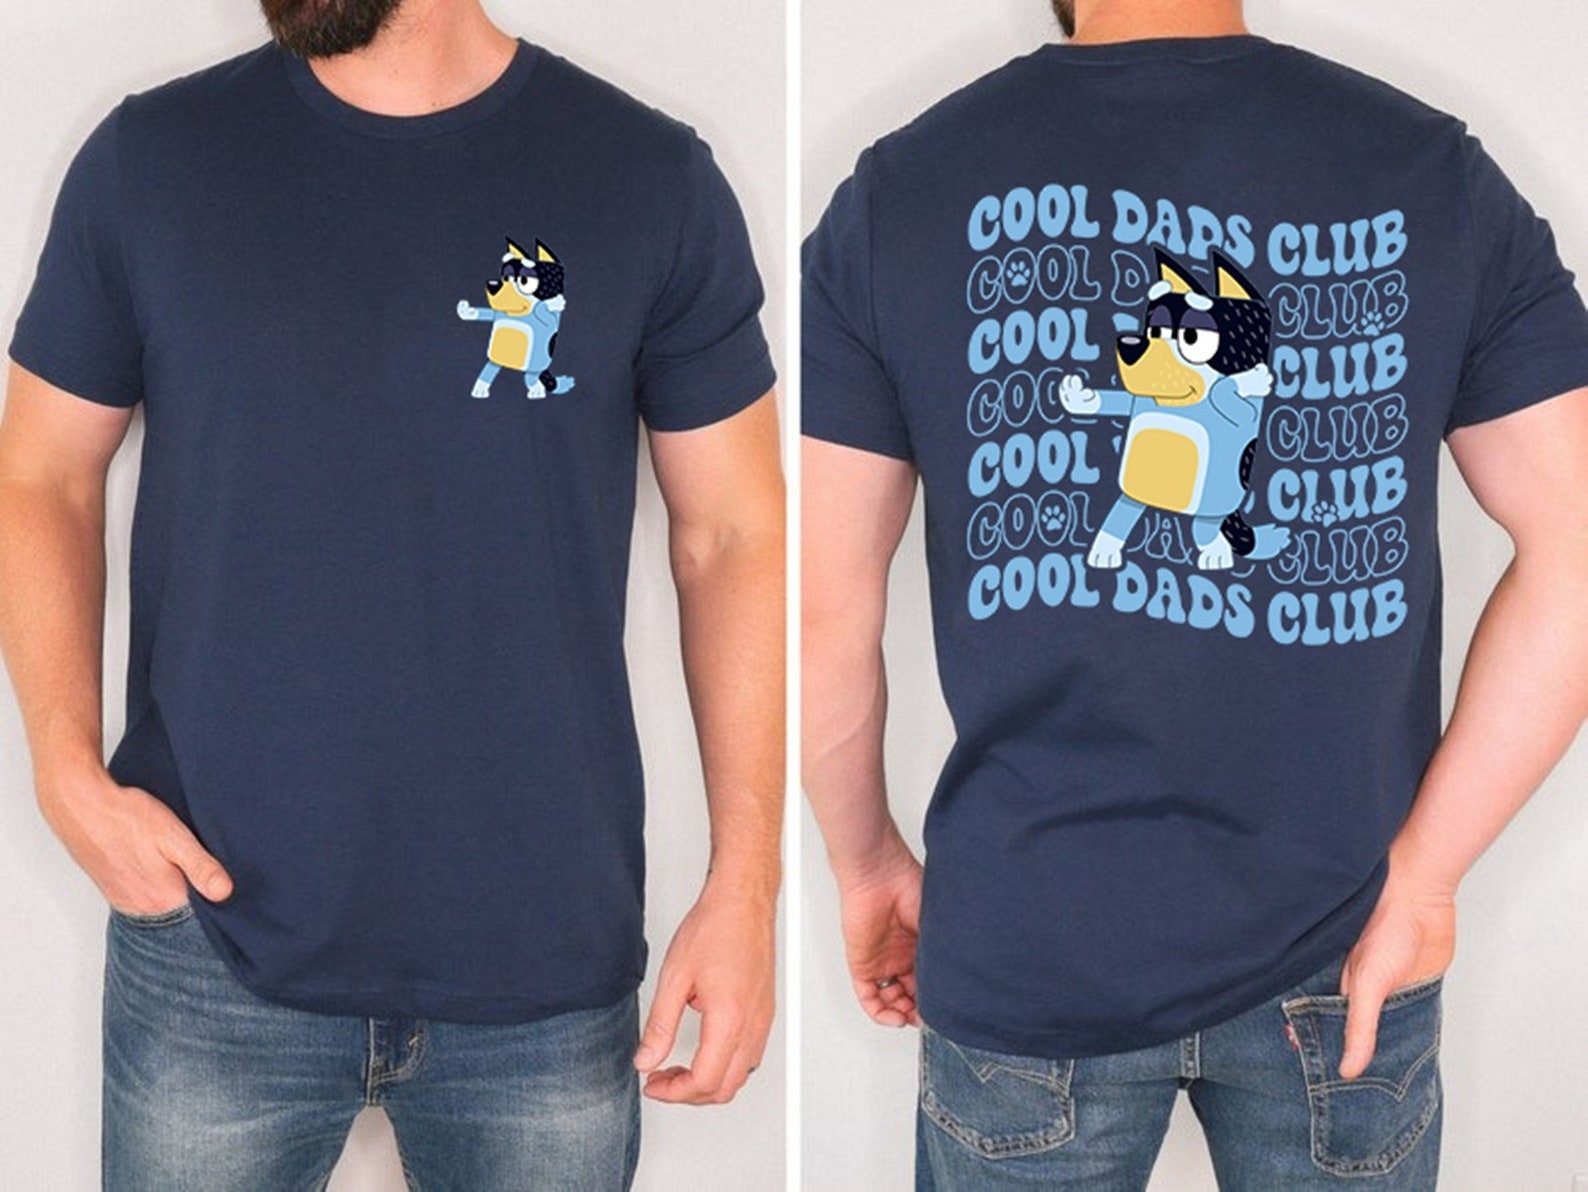 Bluey T Shirt Adult Bluey Shirt Bluey the Dog Tshirt Cartoon Shirt